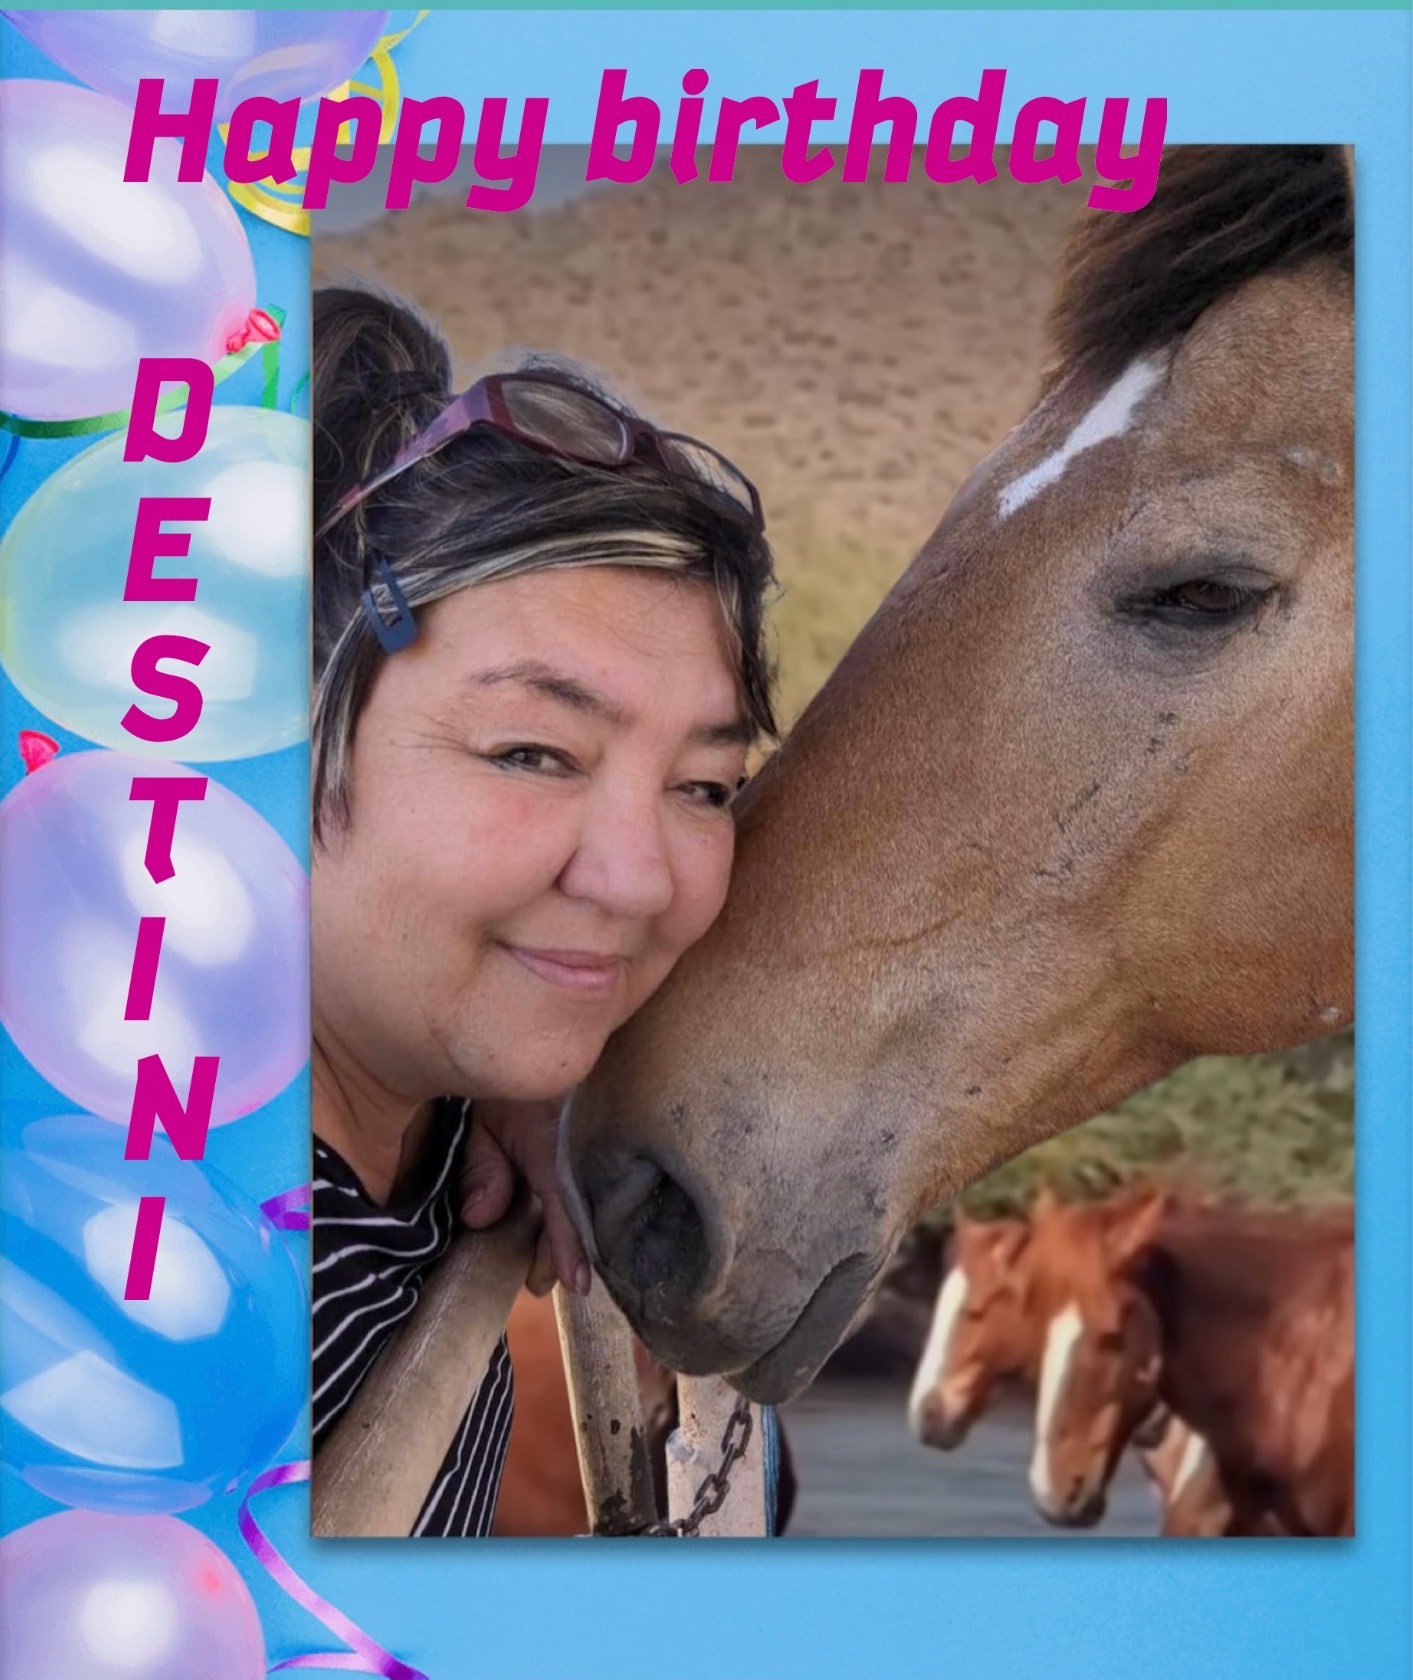 Happy birthday, Destini!